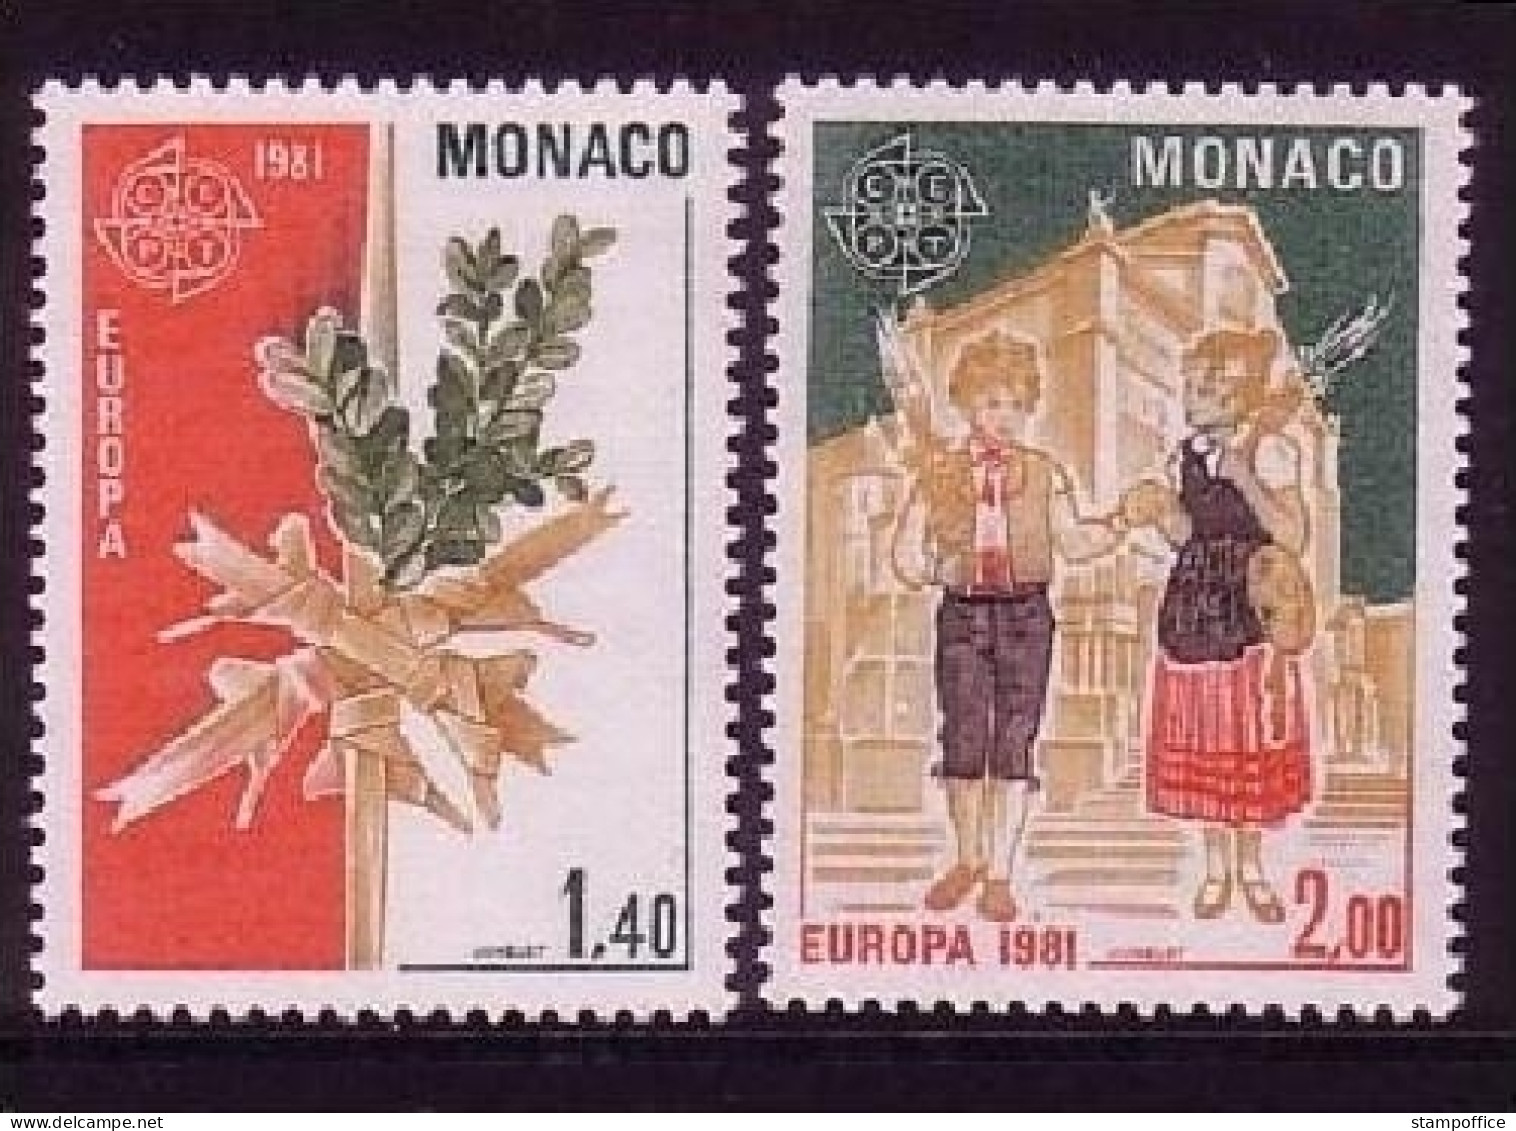 MONACO MI-NR. 1473-1474 POSTFRISCH(MINT) EUROPA 1981 FOLKLORE - 1981